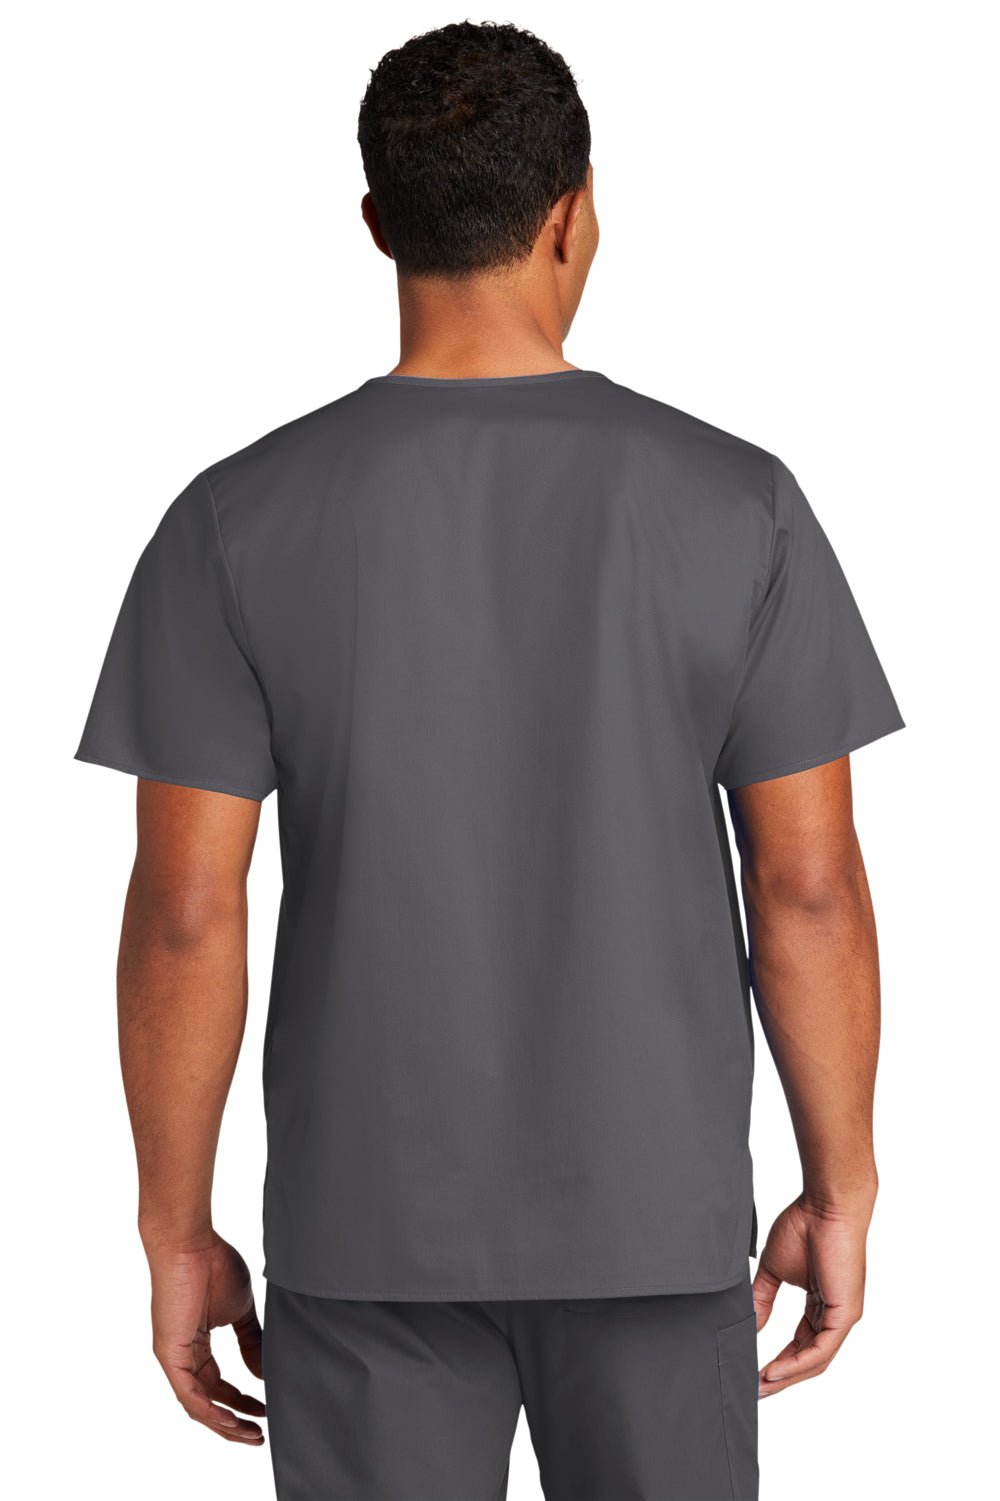 Wonderwink WW3160 WorkFlex Short Sleeve V-Neck Shirt w/ Pocket Pewter Grey Back